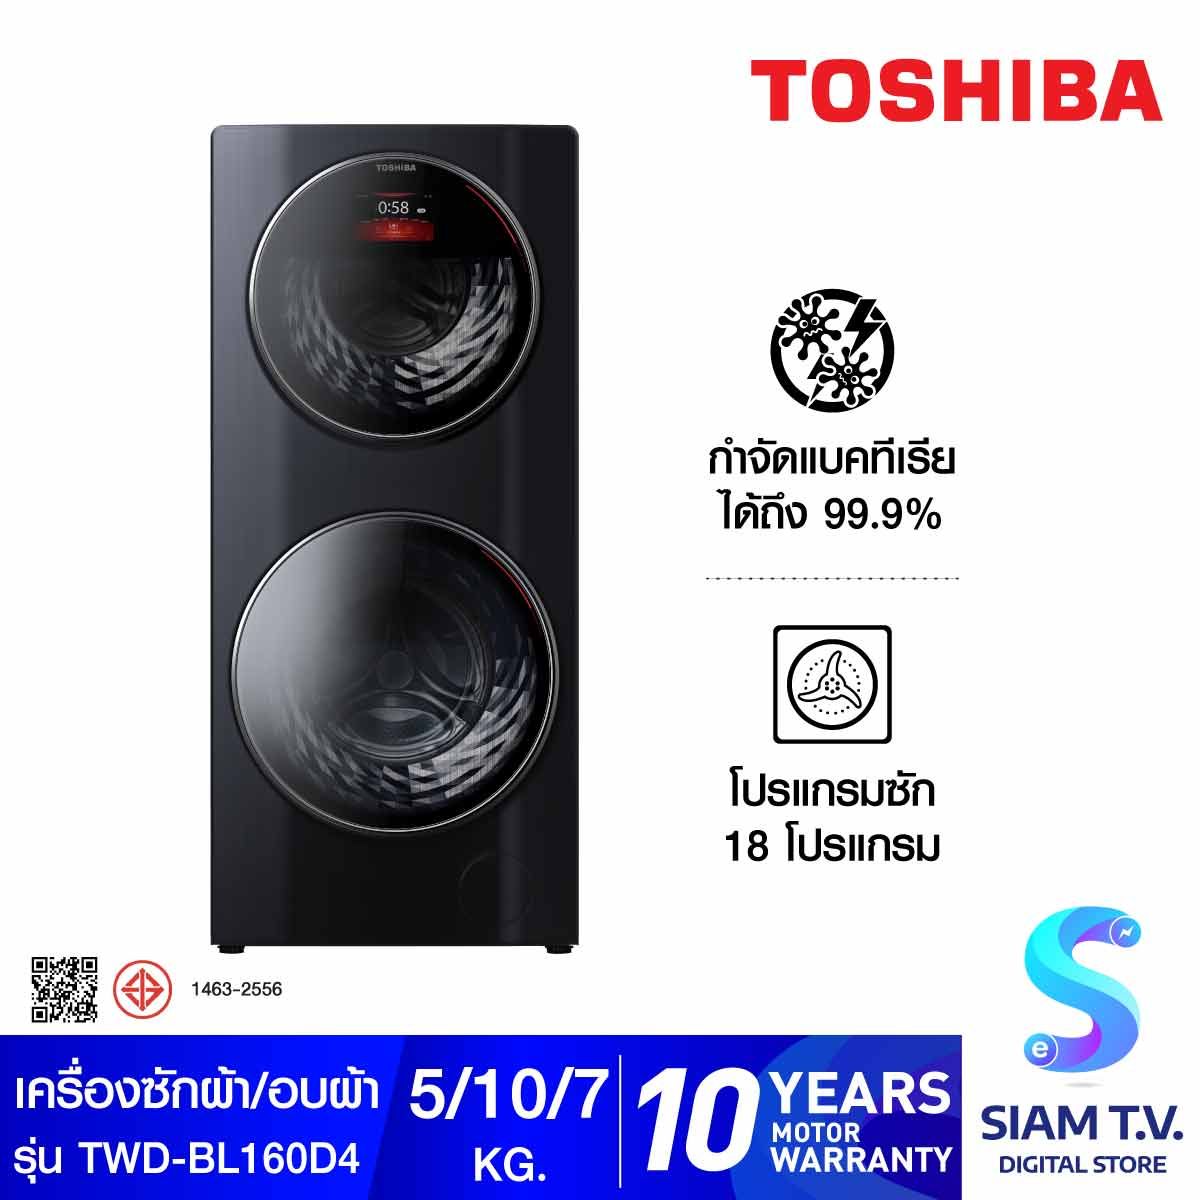 TOSHIBA เครื่องซักผ้าฝาหน้า Dual Drum Washer Dryer 5kg และ10/7kg สีเทา รุ่น TWD-BL160D4S(MG)